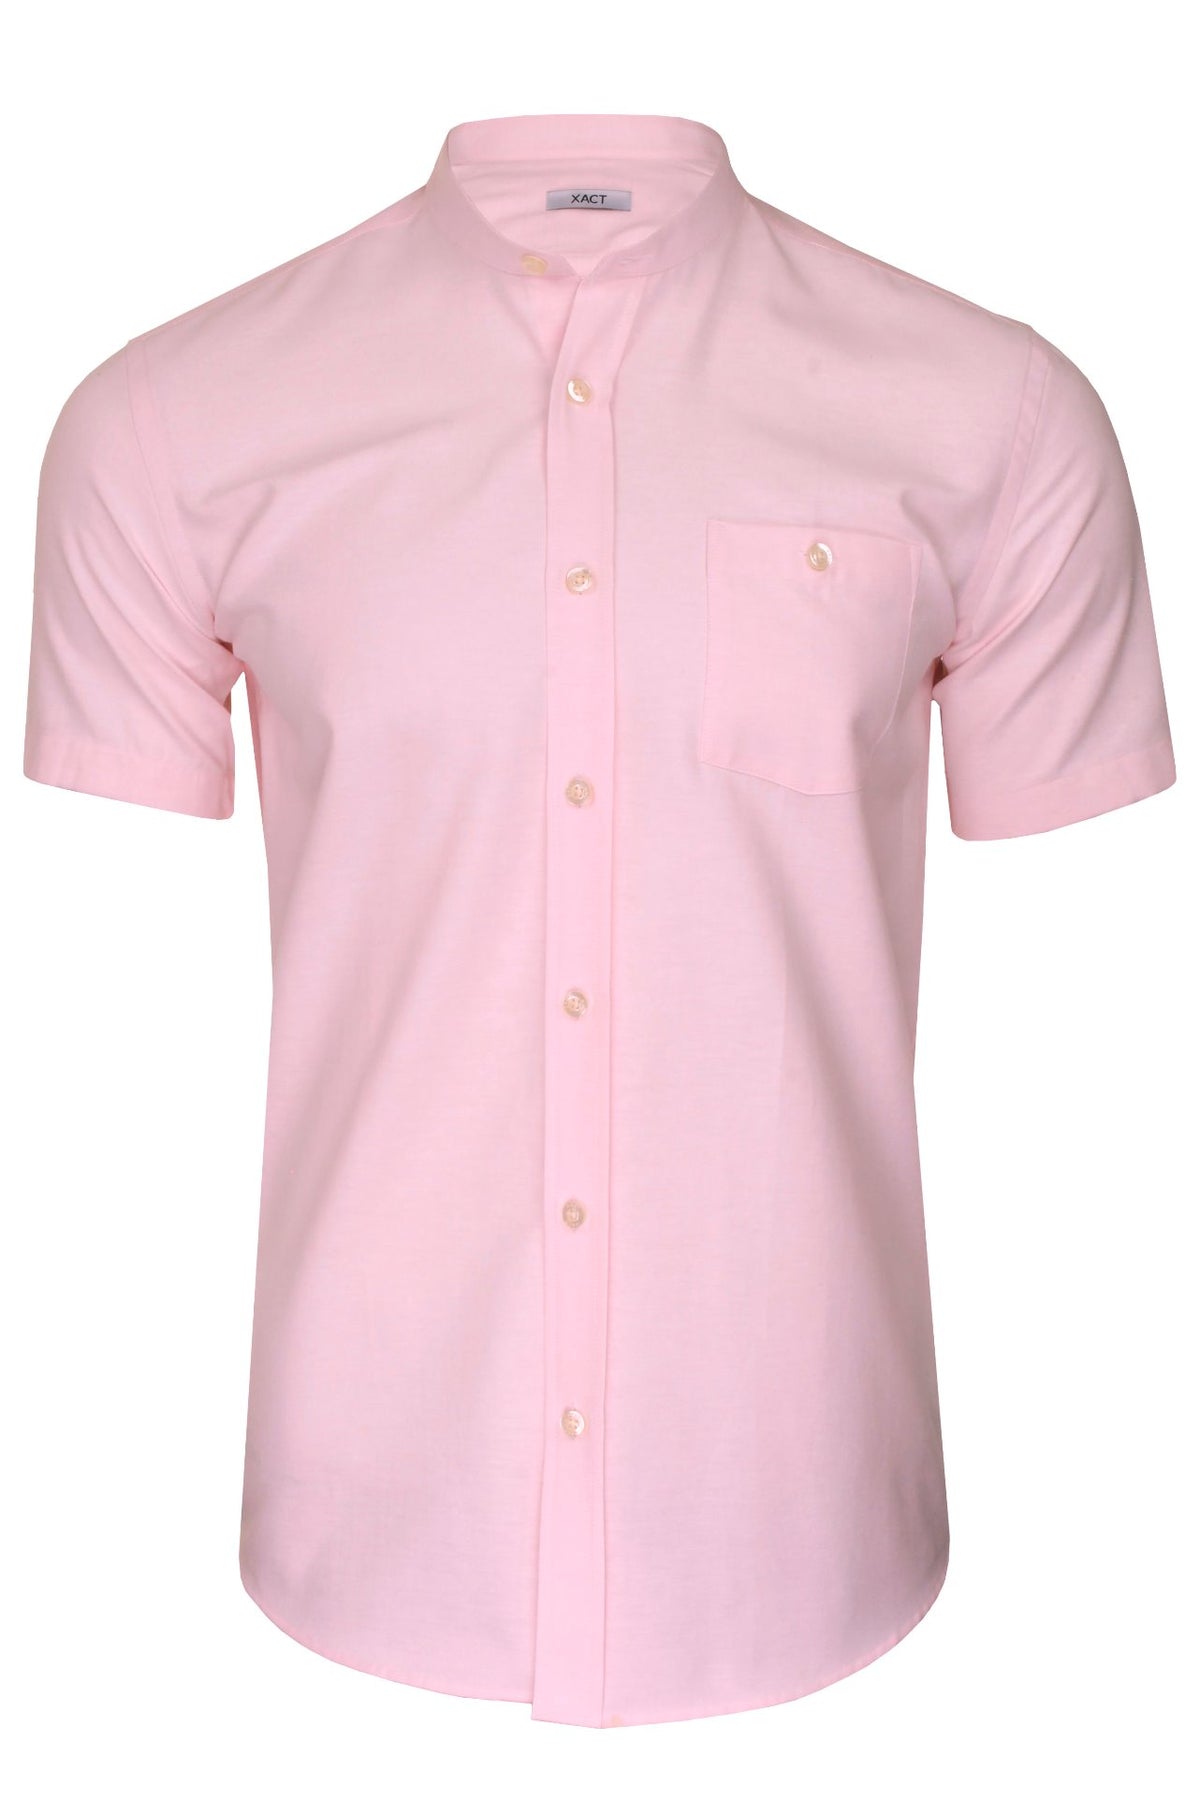 Xact Men's Grandad Collar Oxford Shirt Slim Fit Short Sleeved, 01, Xsh1022, Soft Pink